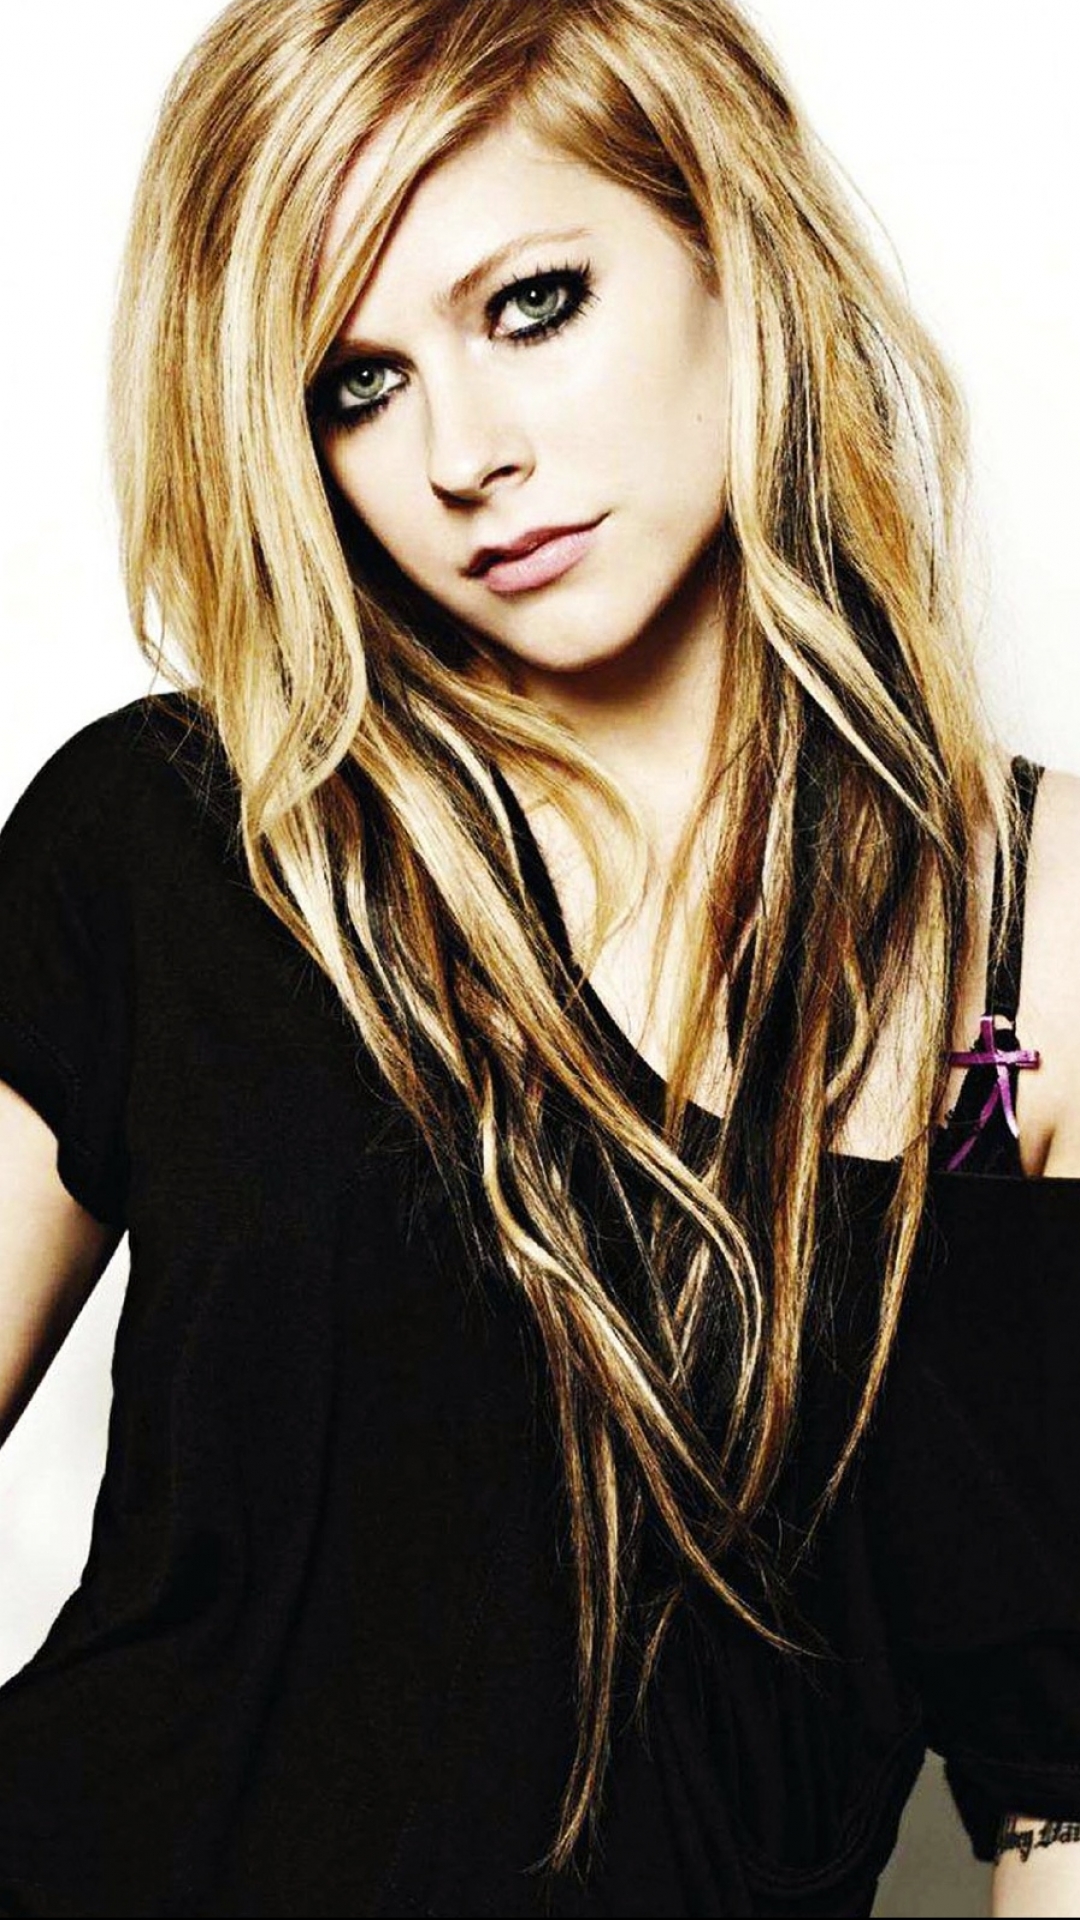 Avril Lavigne Wallpaper Mobile - HD Wallpaper 